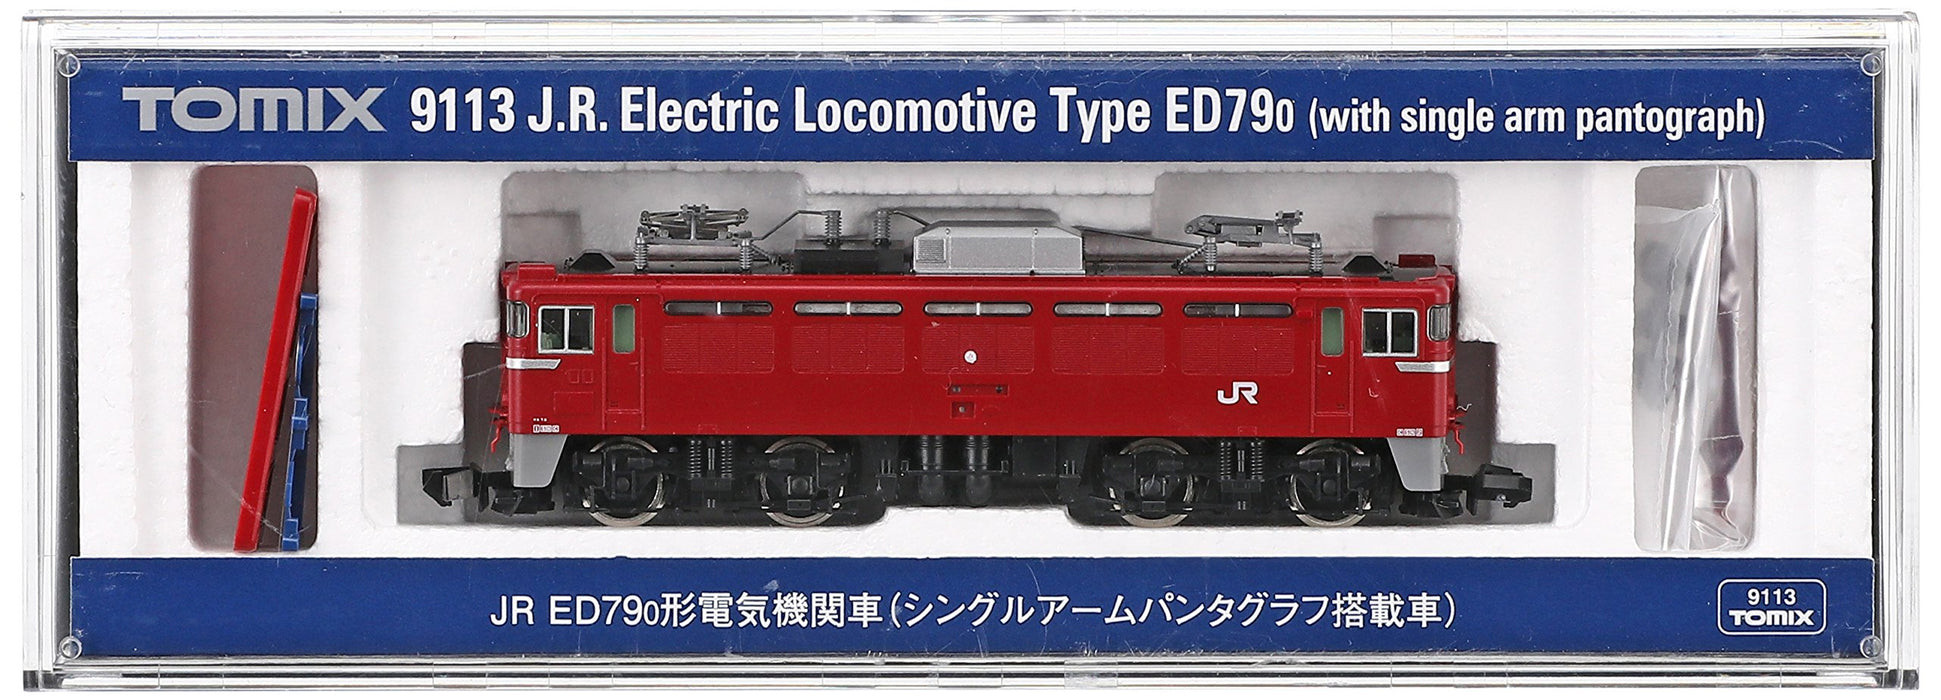 Tomytec Ed79-0 Einarmige Elektrolokomotive P 9113, Tomix, Spur N, Eisenbahnmodell